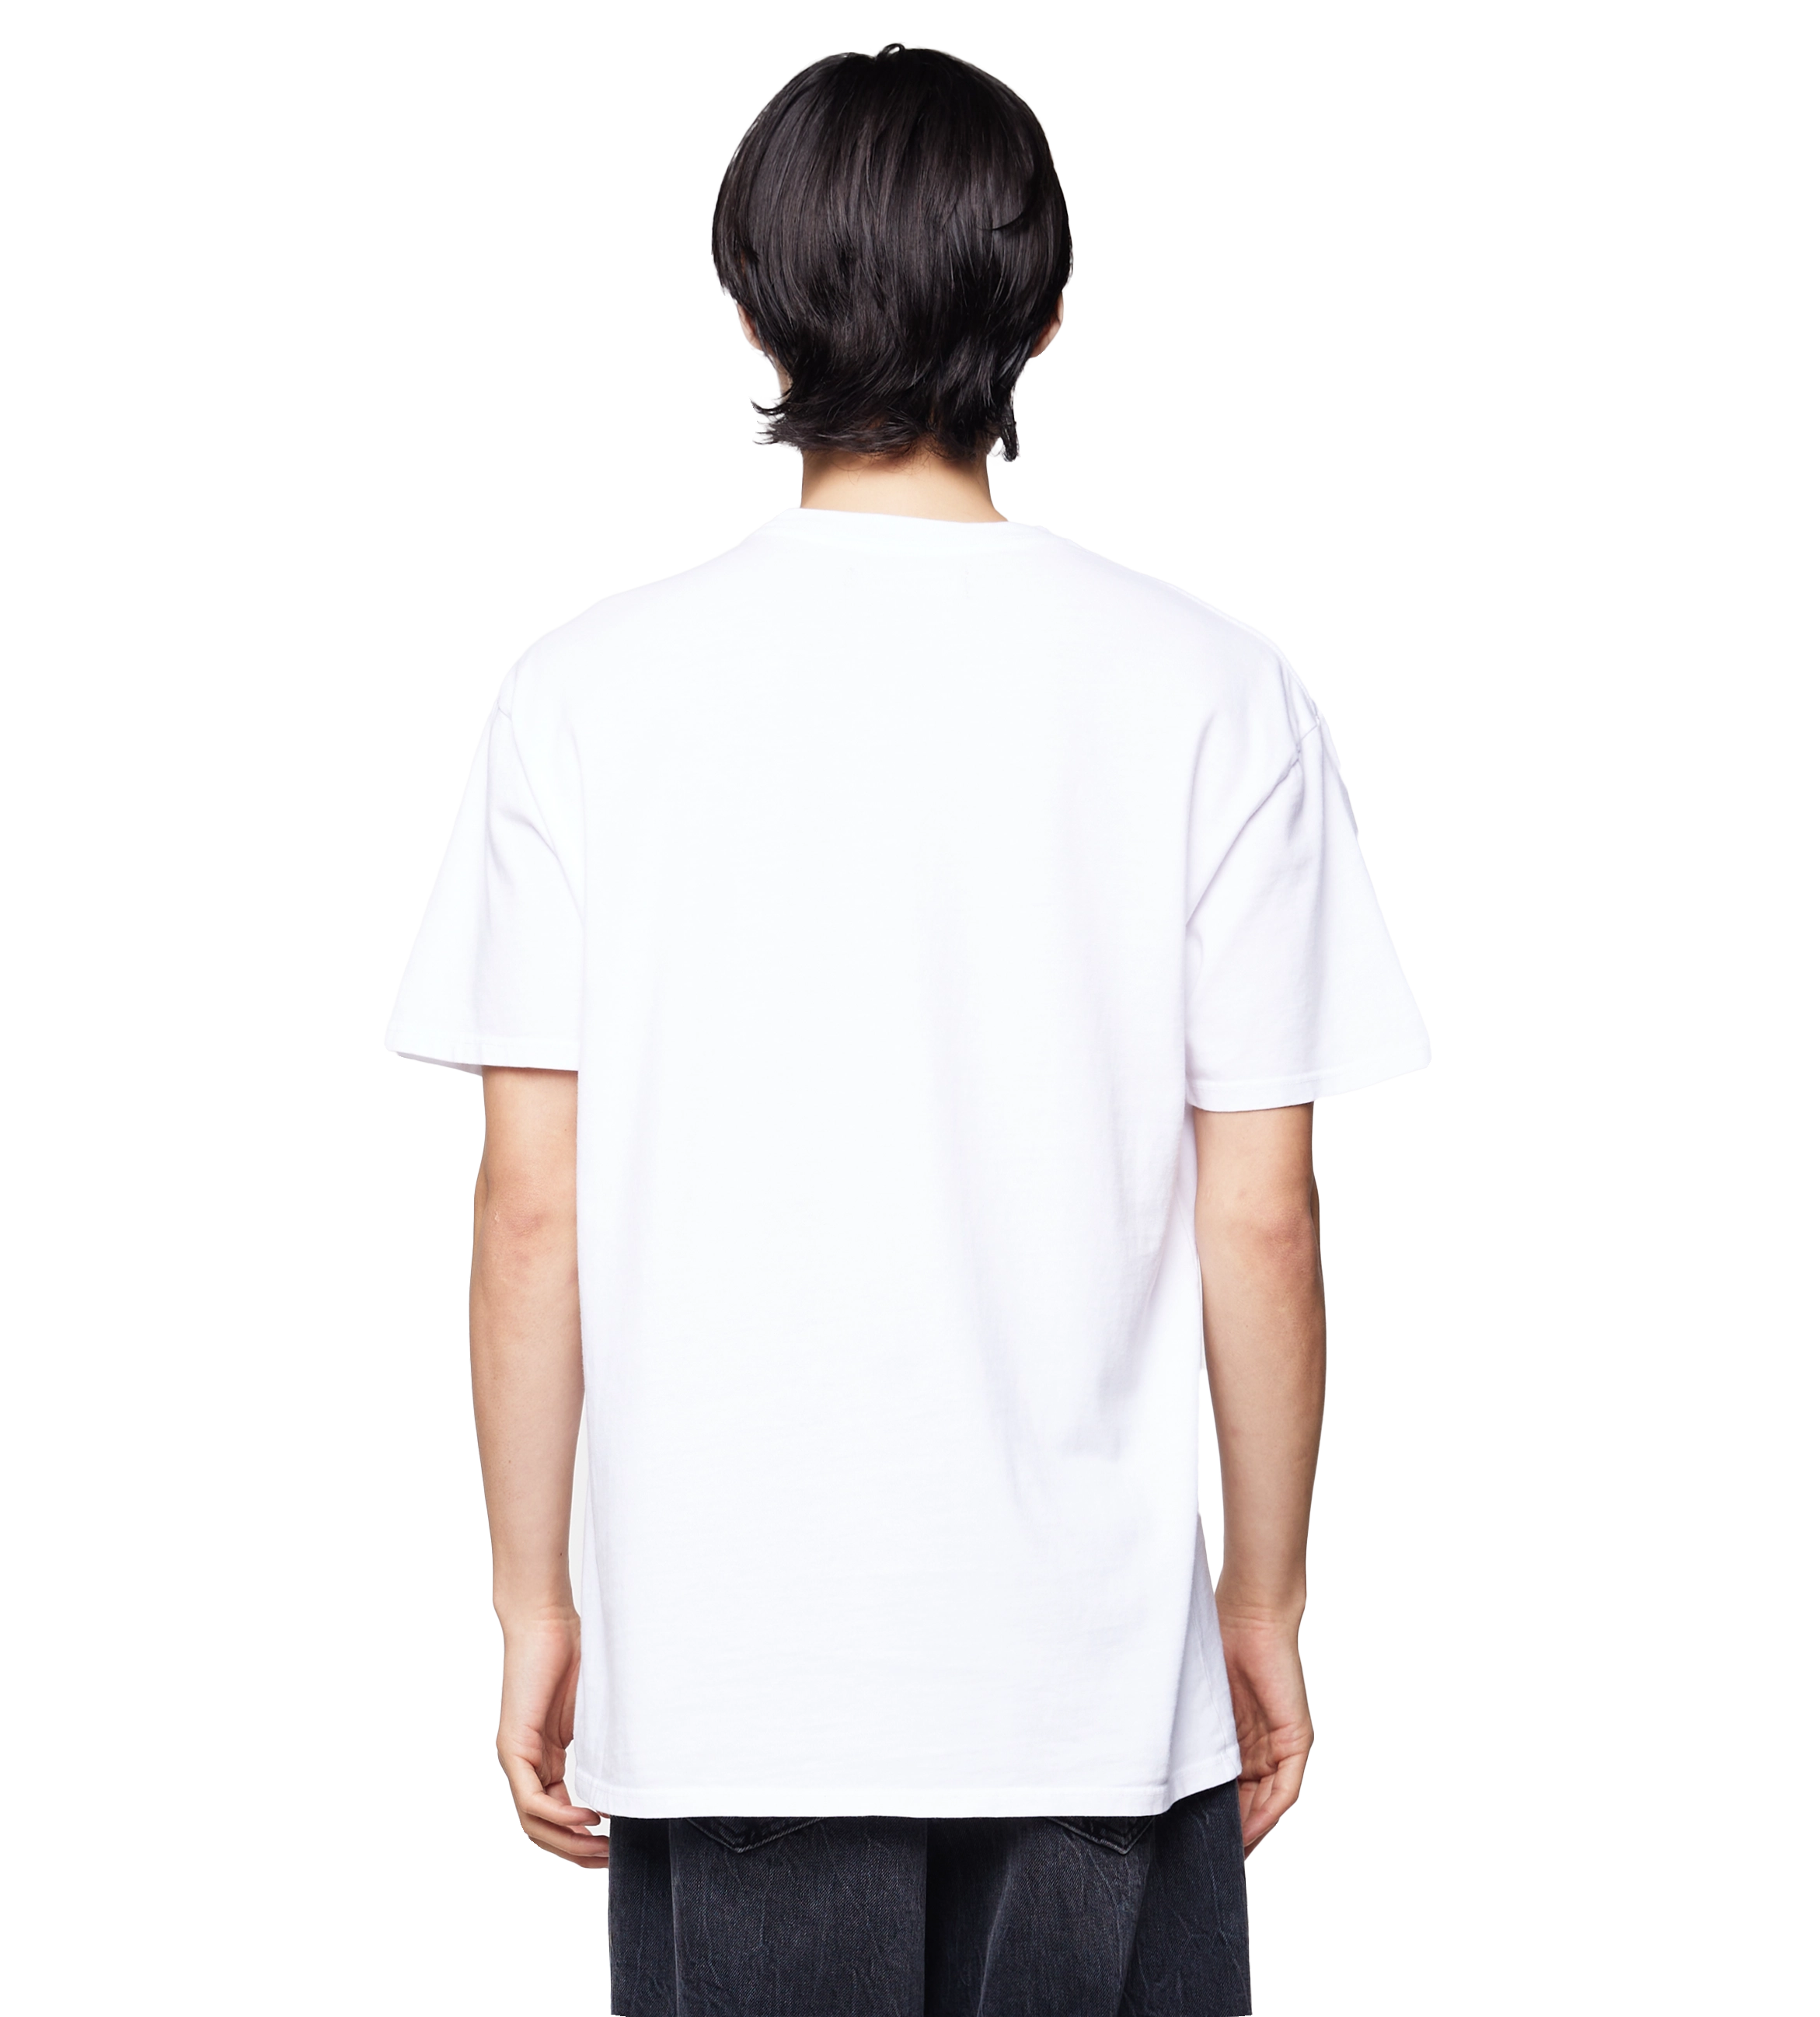 x Kodak Black Grillz T-Shirt White